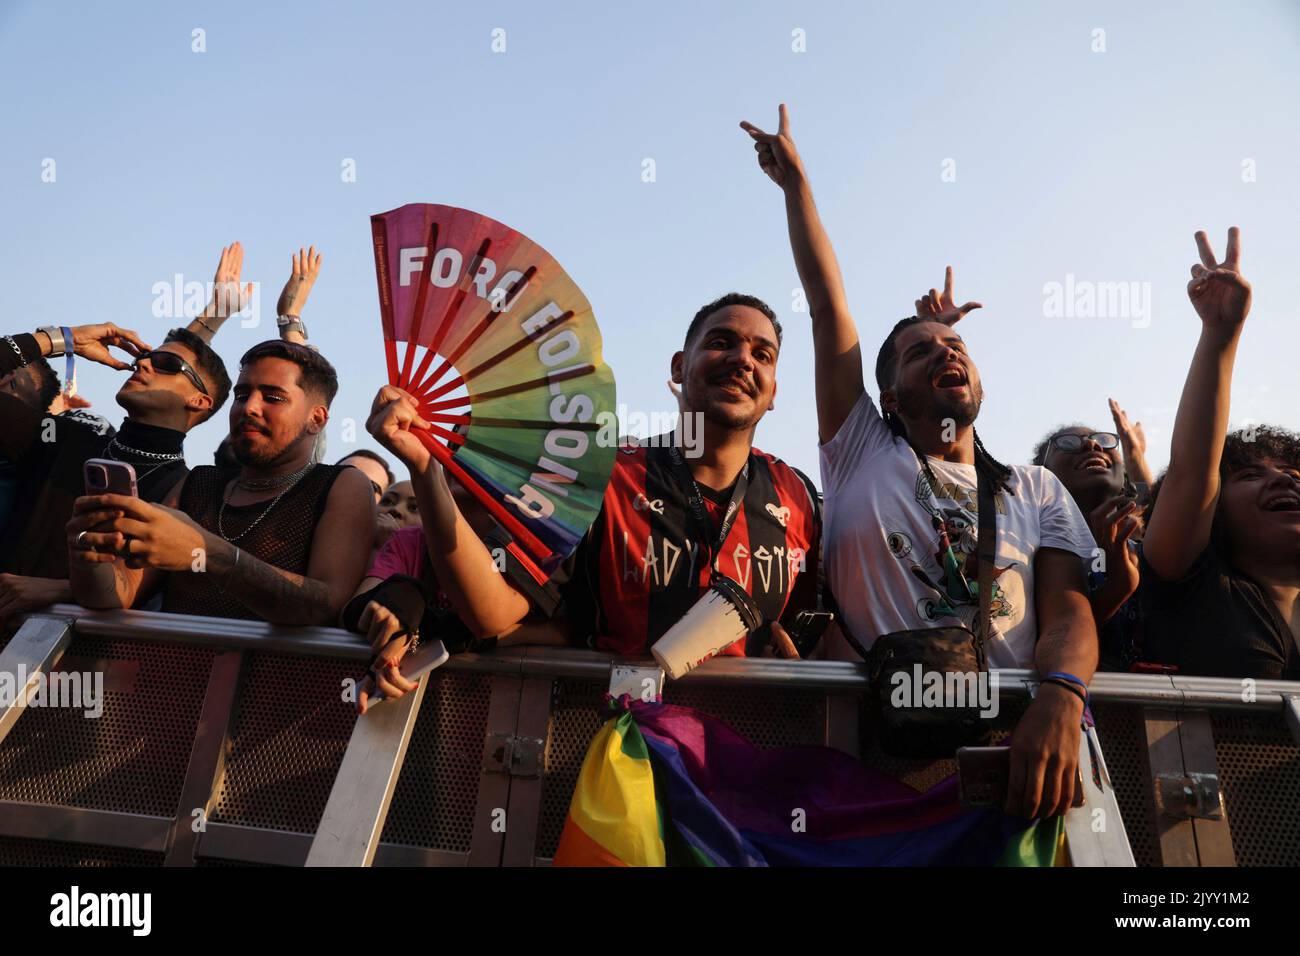 Fans attend the Rock in Rio music festival in Rio de Janeiro, Brazil September 8, 2022. REUTERS/Pilar Olivares Stock Photo